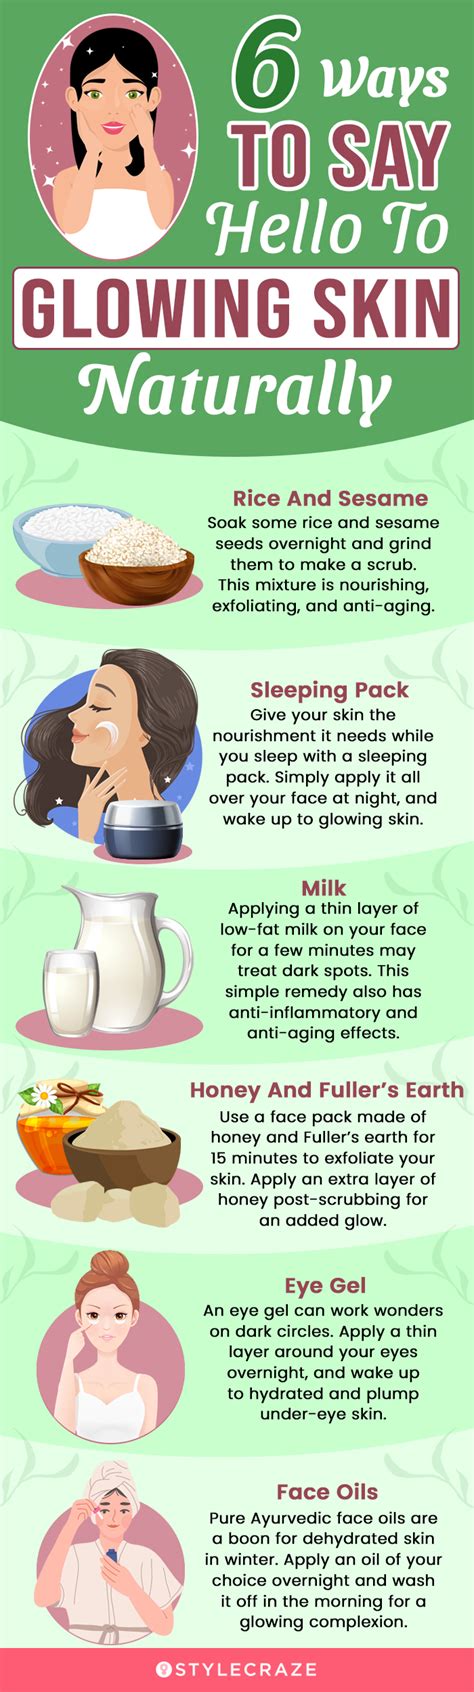 7 Simple Ways To Make Skin Glow Overnight